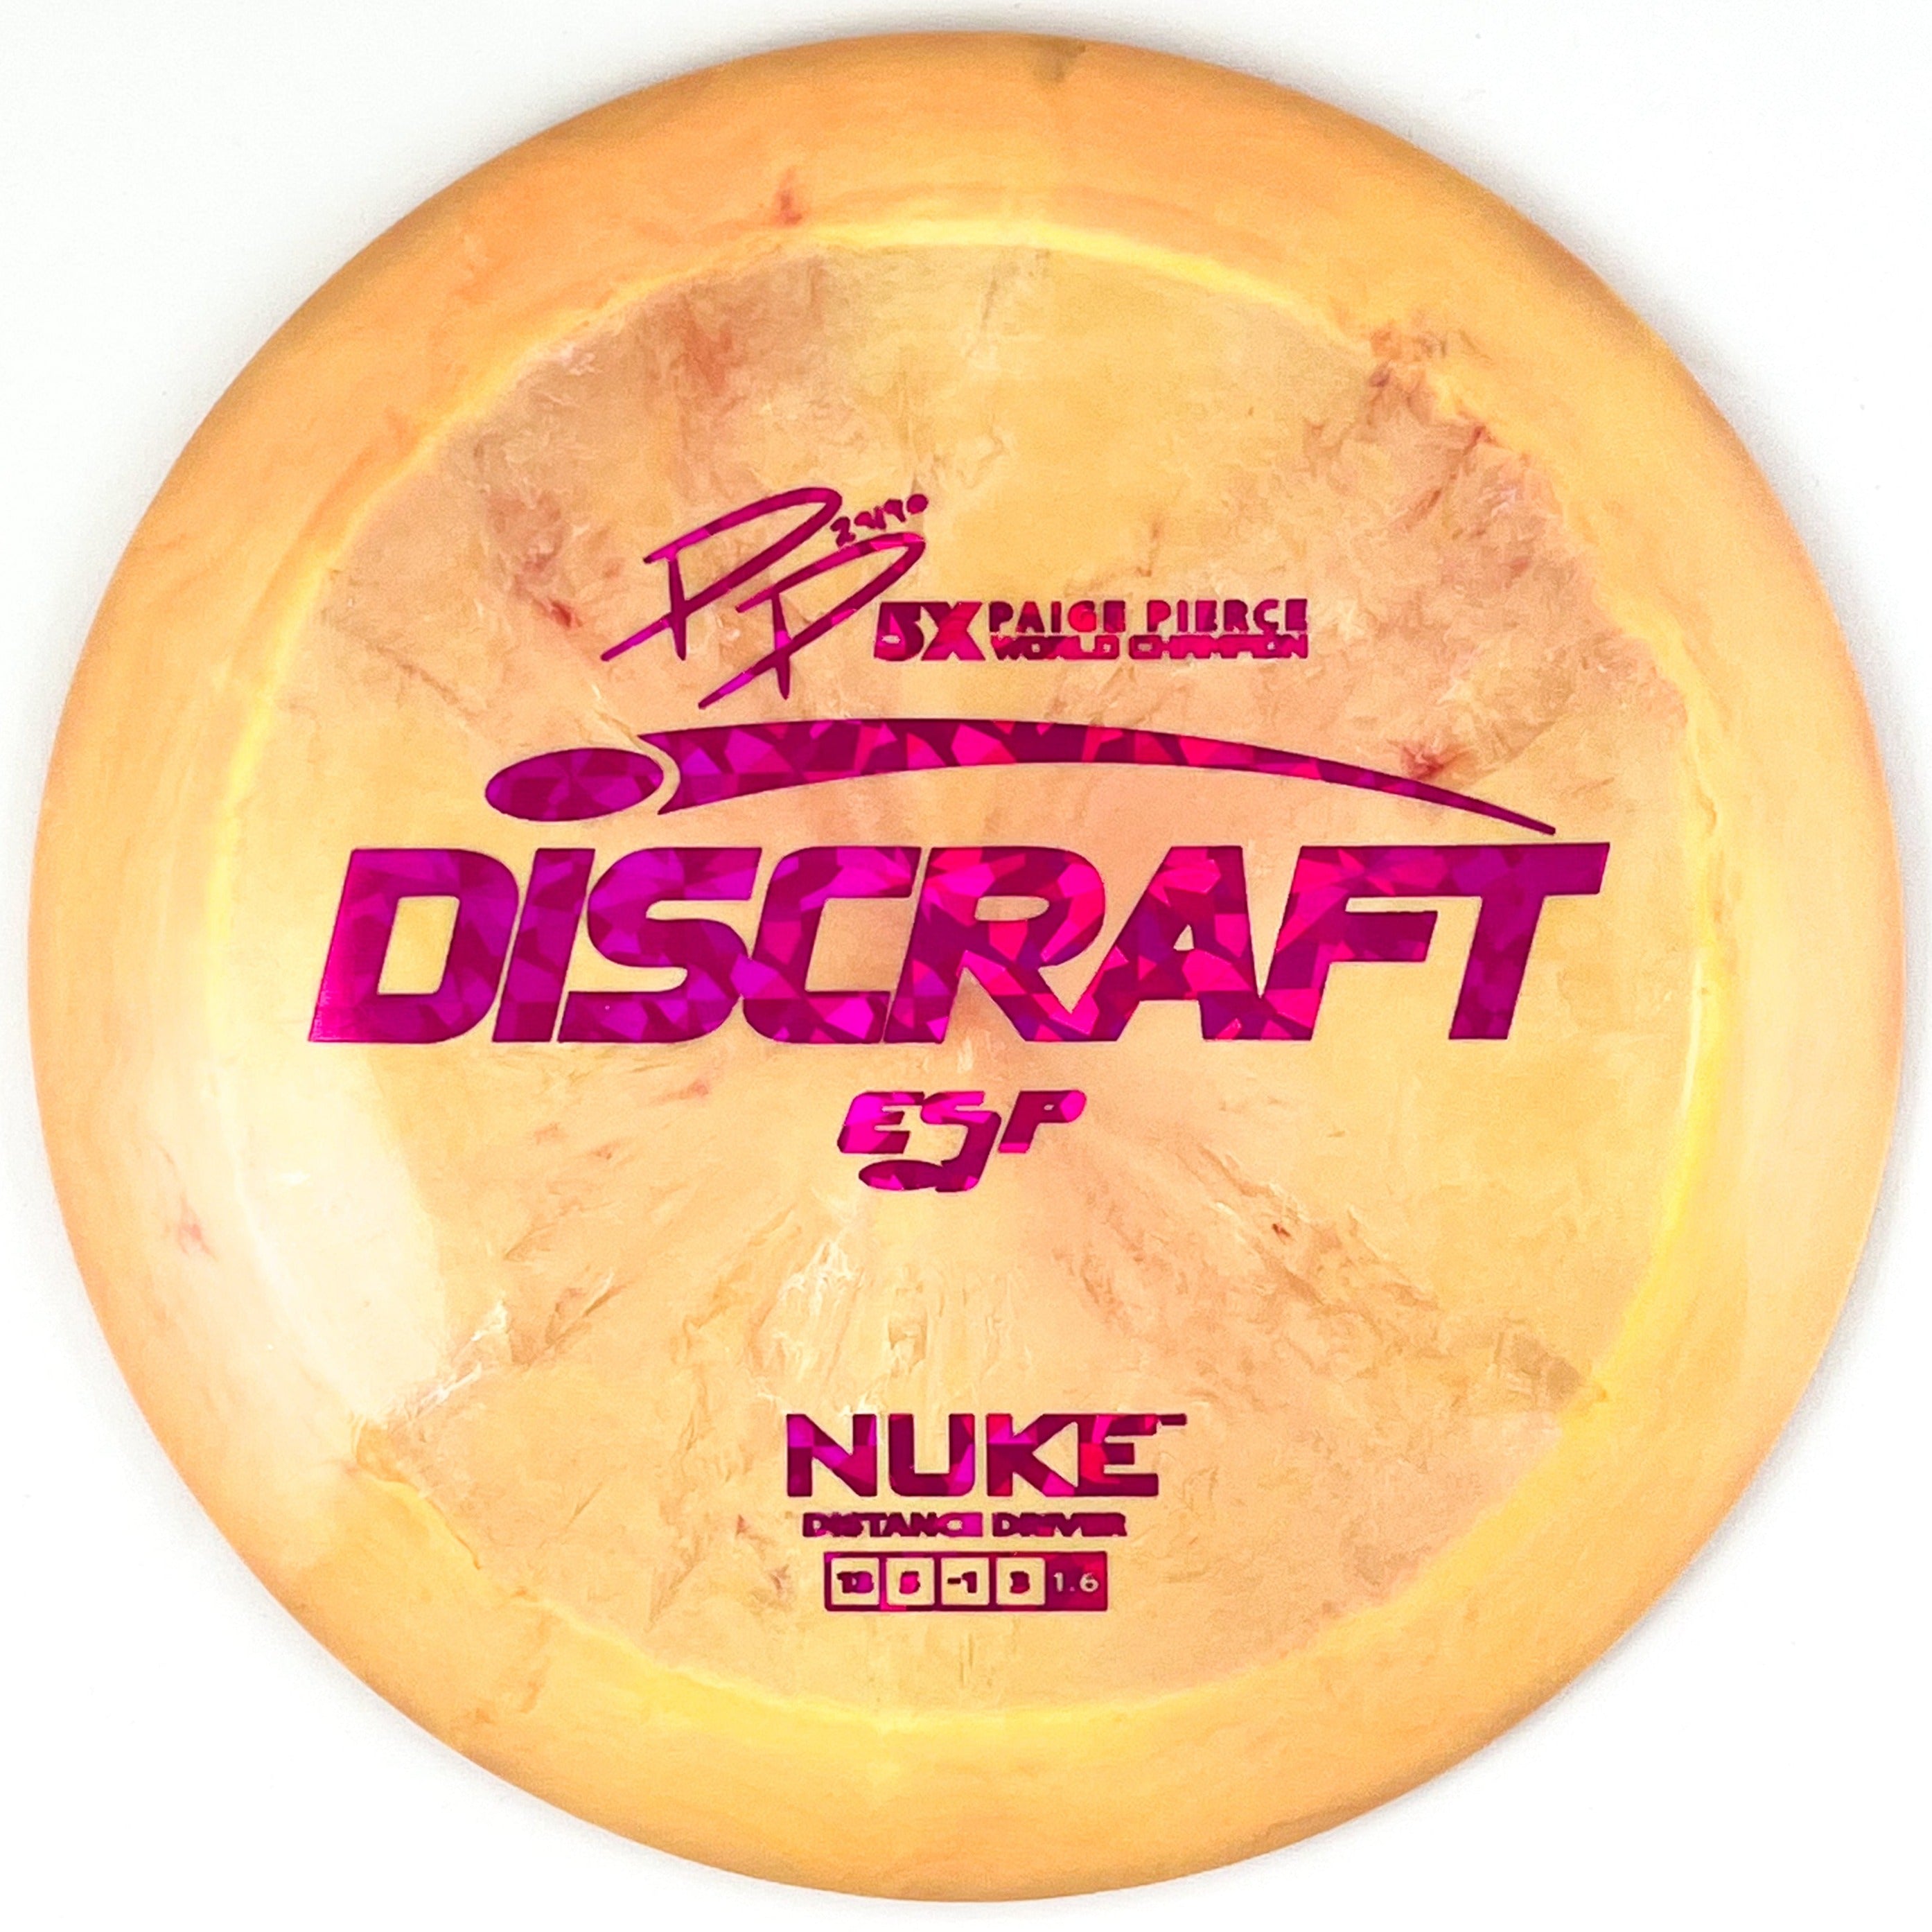 5x Paige Pierce ESP Nuke disc golf distance driver by Discraft.